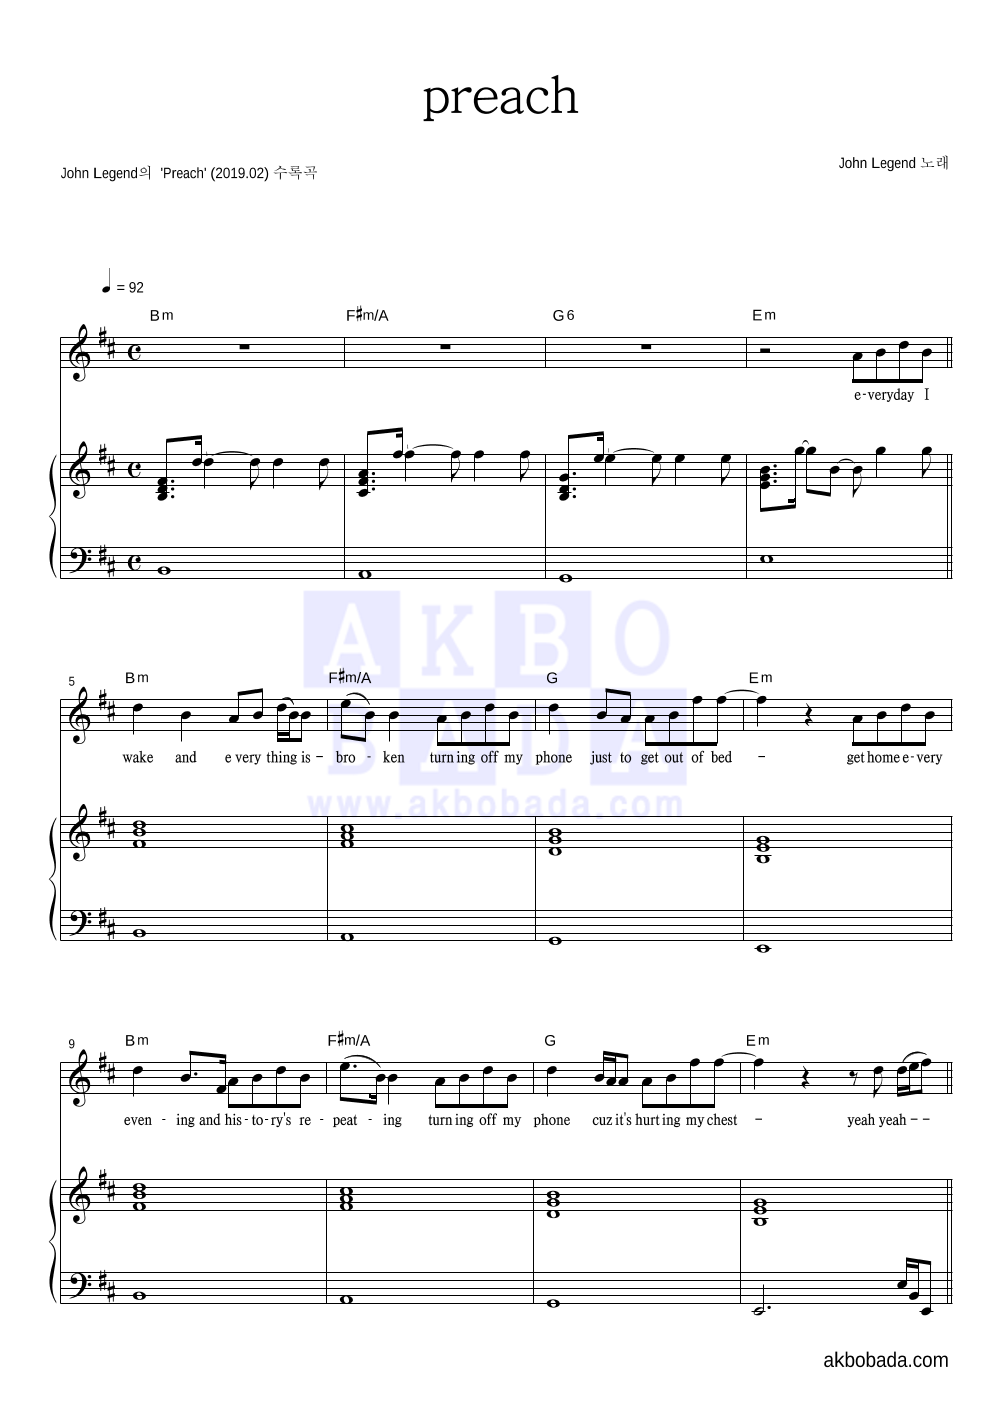 John Legend - Preach 피아노 3단 악보 